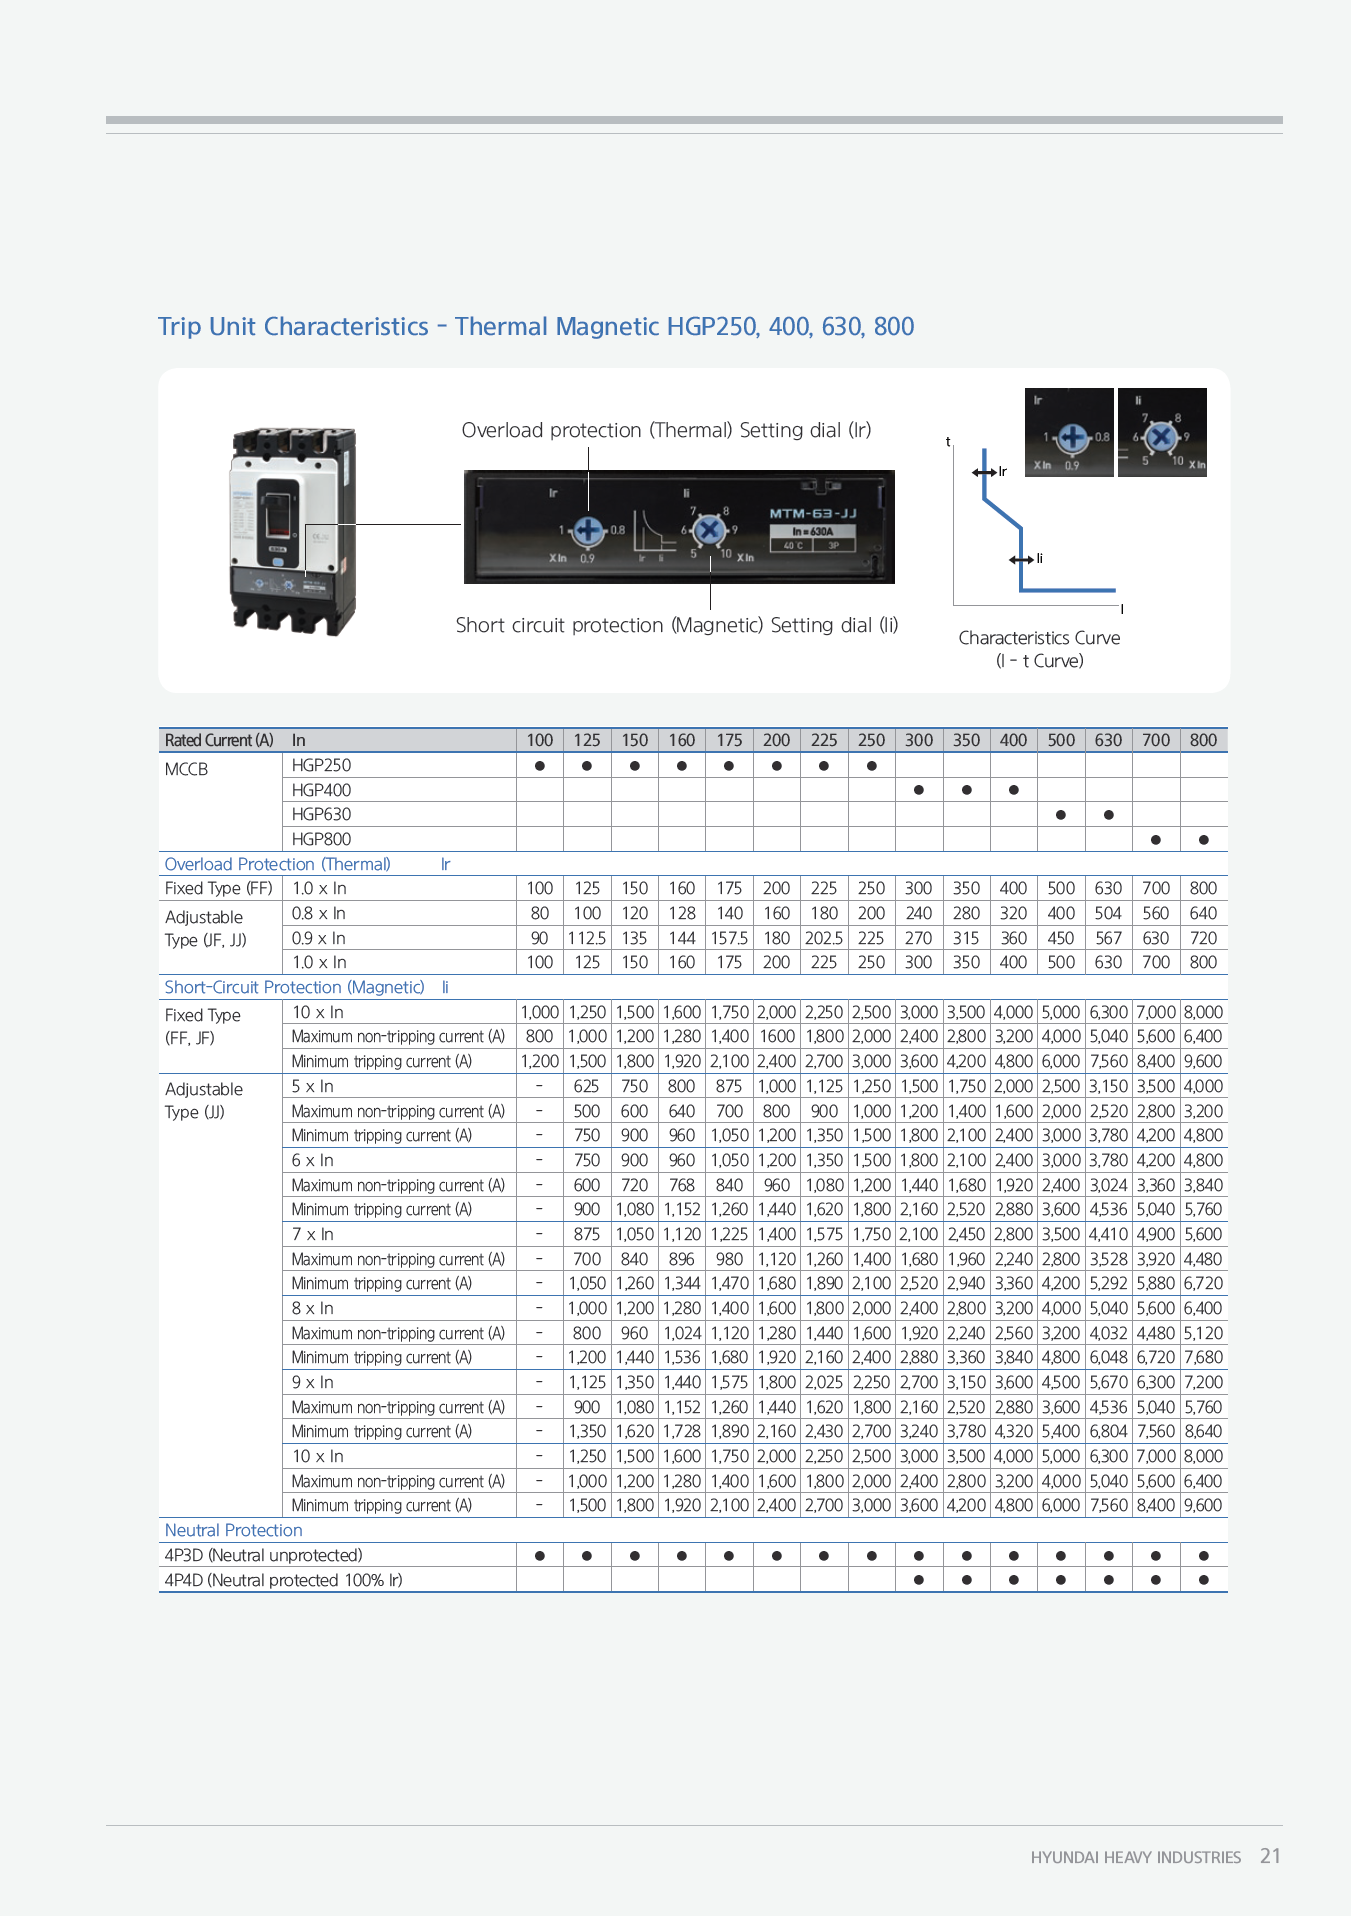 Hyundai Marine Circuit Breaker (MCCB) - HGP400F 3P Fixed / Plug-in Type